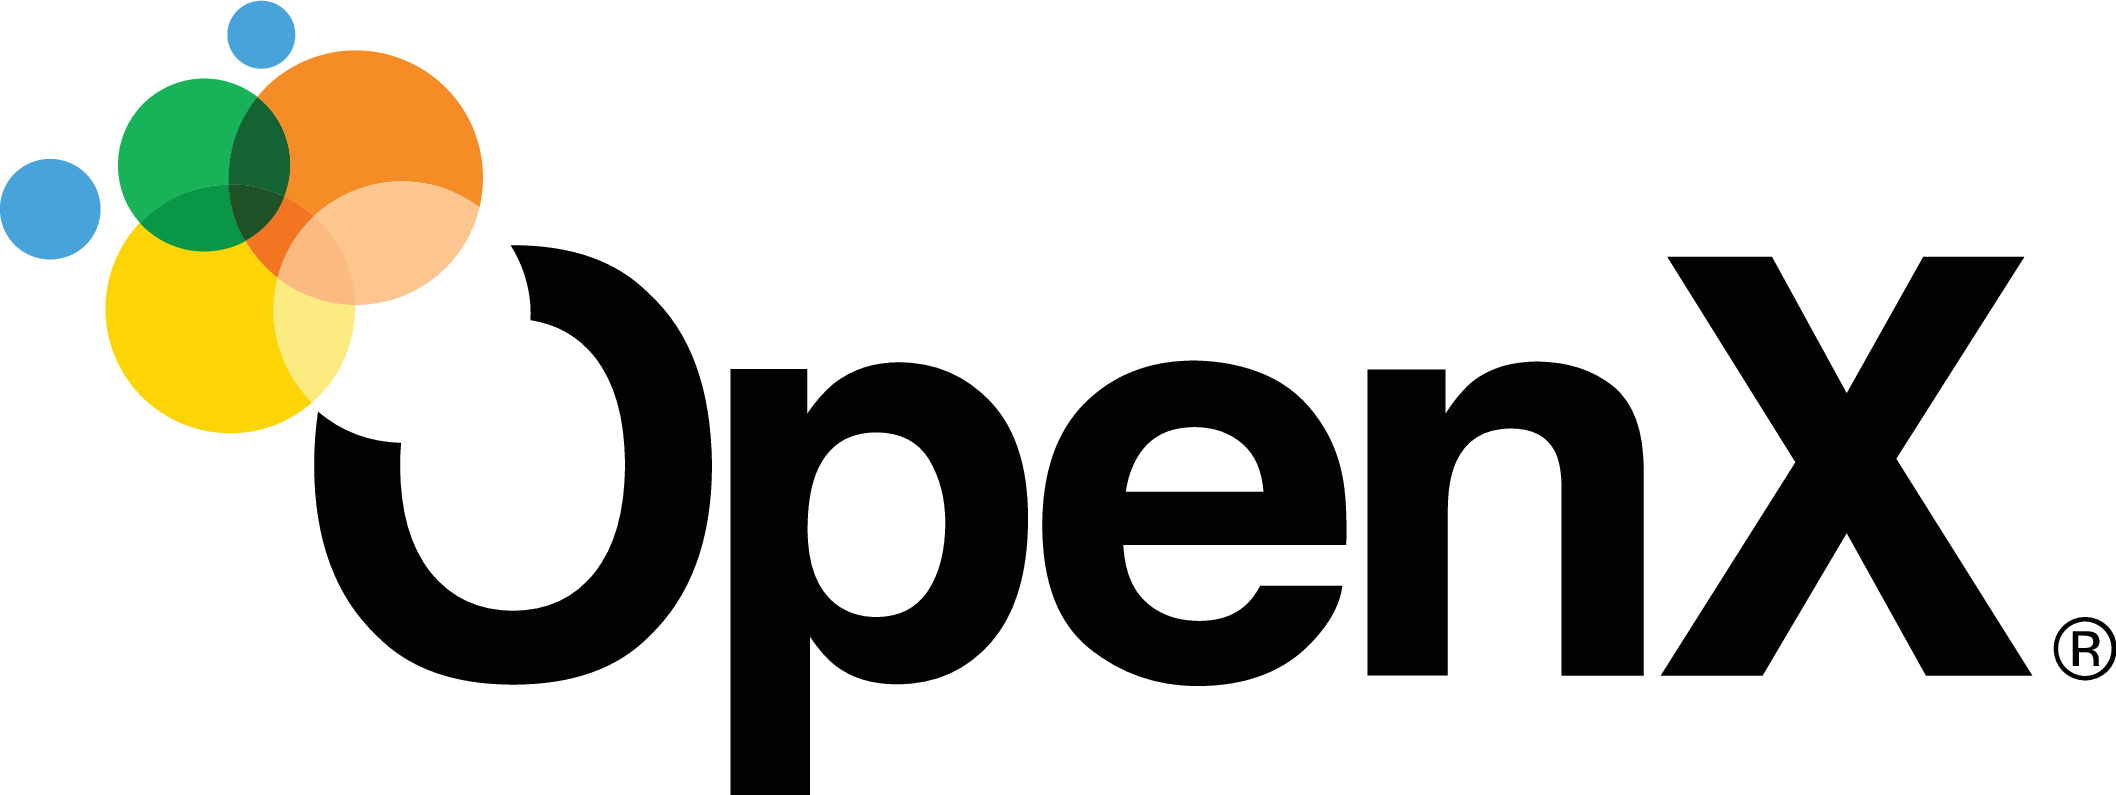 Logotipo da OpenX